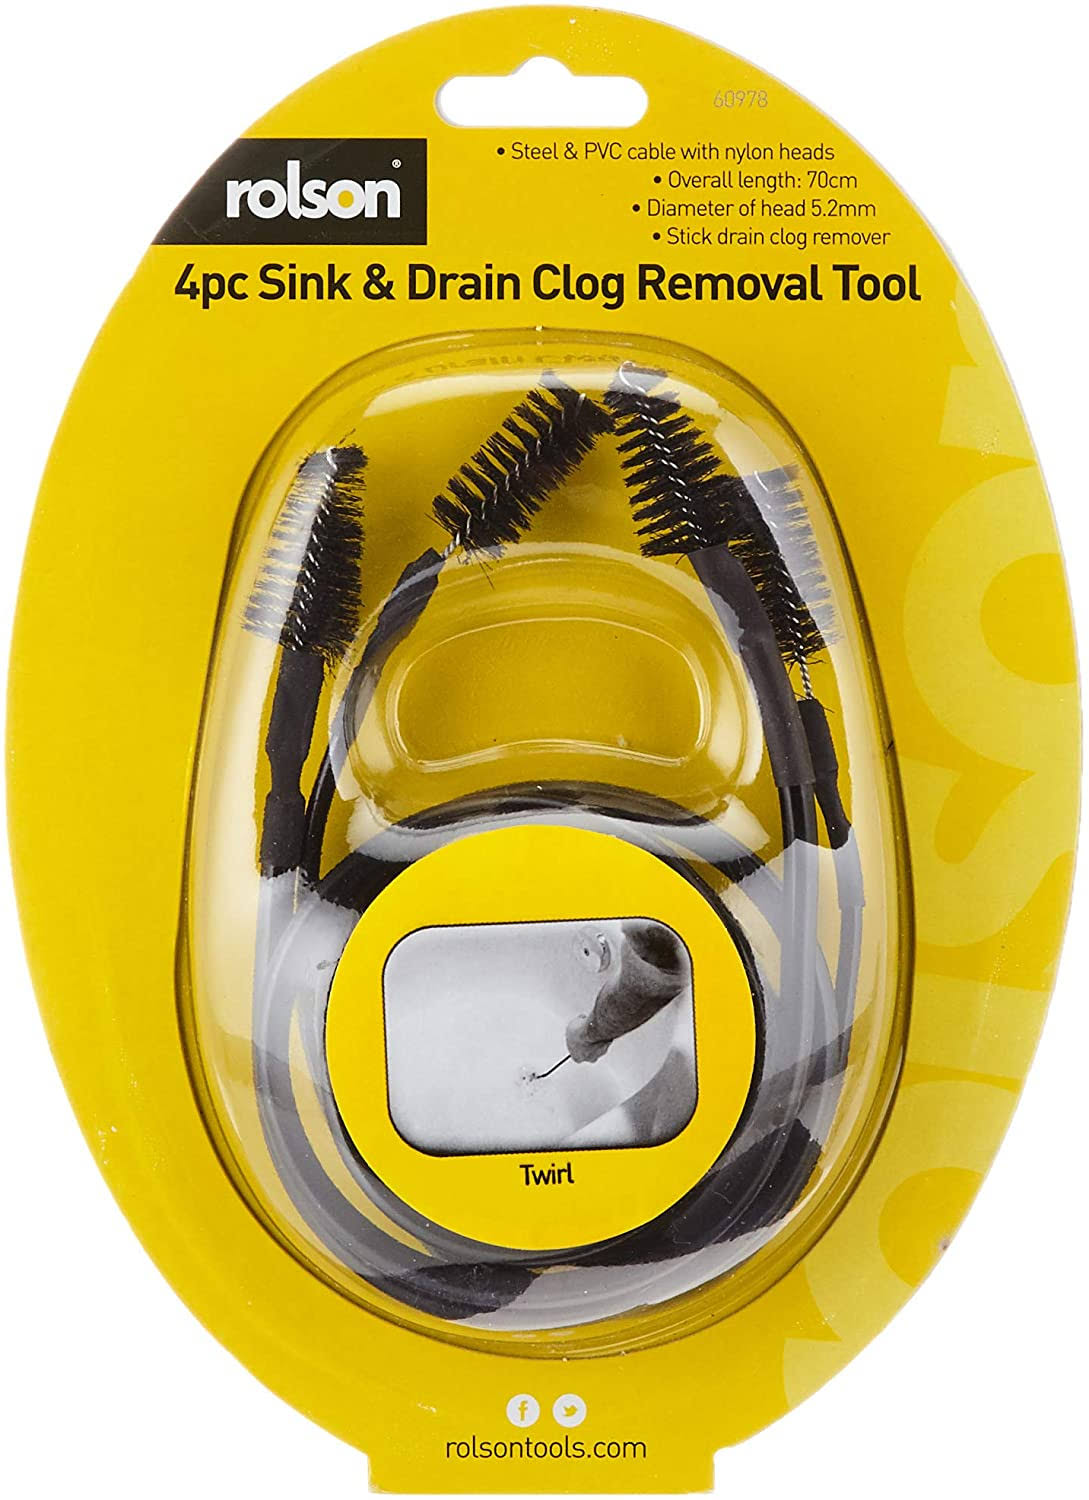 Rolson 60978 Metal Sink Drain Pipe Unblocker Cleaner Snake Spring Tool Set - 4pcs